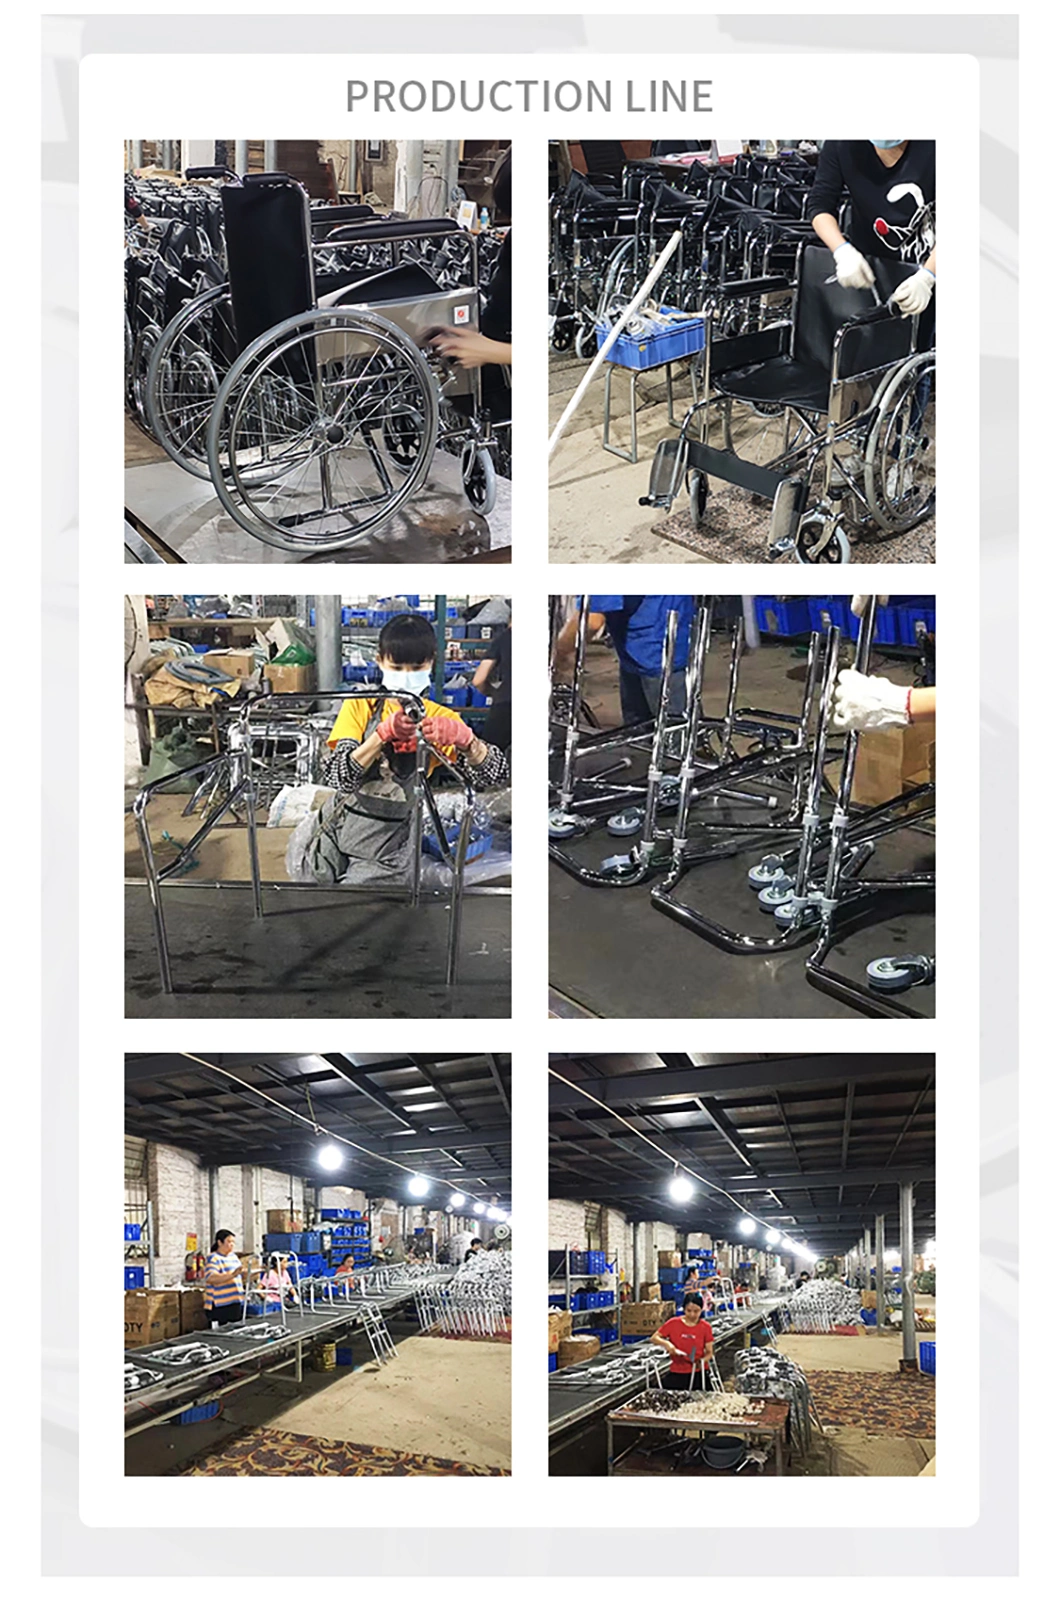 Folding Steel Manual Wheelchair with Chrome Frame